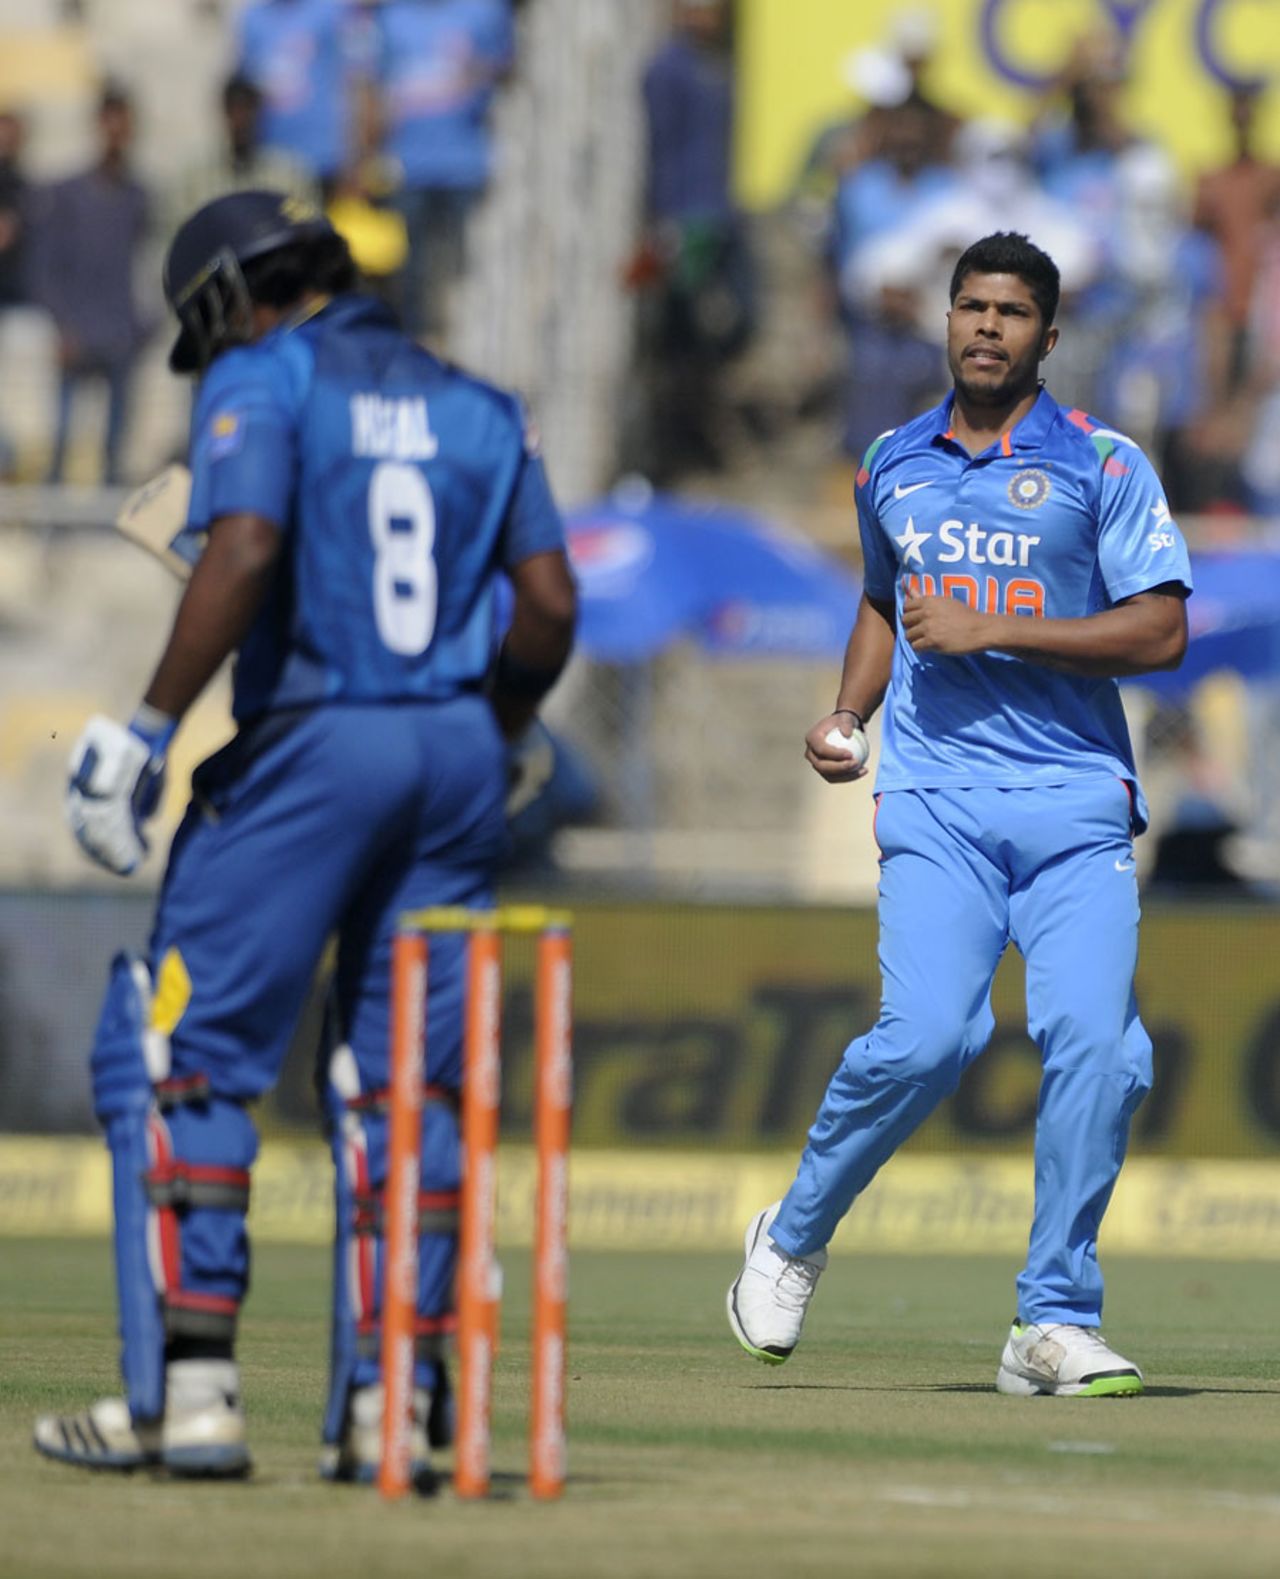 Umesh Yadav trapped Kusal Perera lbw in the first over, India v Sri Lanka, 2nd ODI, Ahmedabad, November 6, 2014